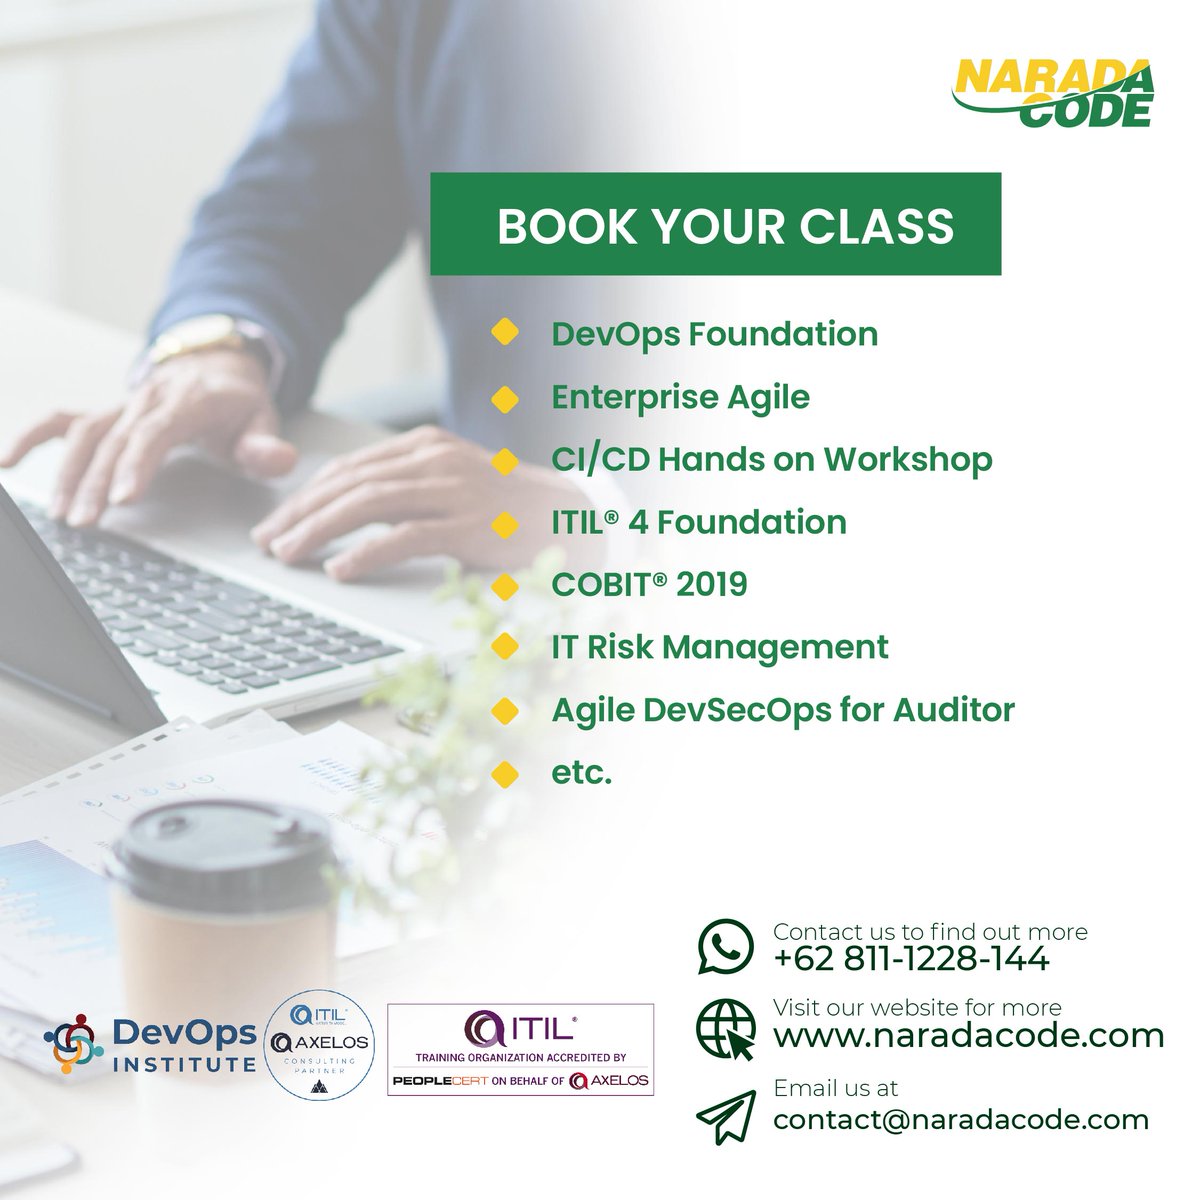 Upgrade your IT skills and boost your career with NaradaCode! 
#devops #itil4 #cobit #prince2 #devopsfoundation #itilfoundation #training #trainingonline #devopsinstitute #naradacode